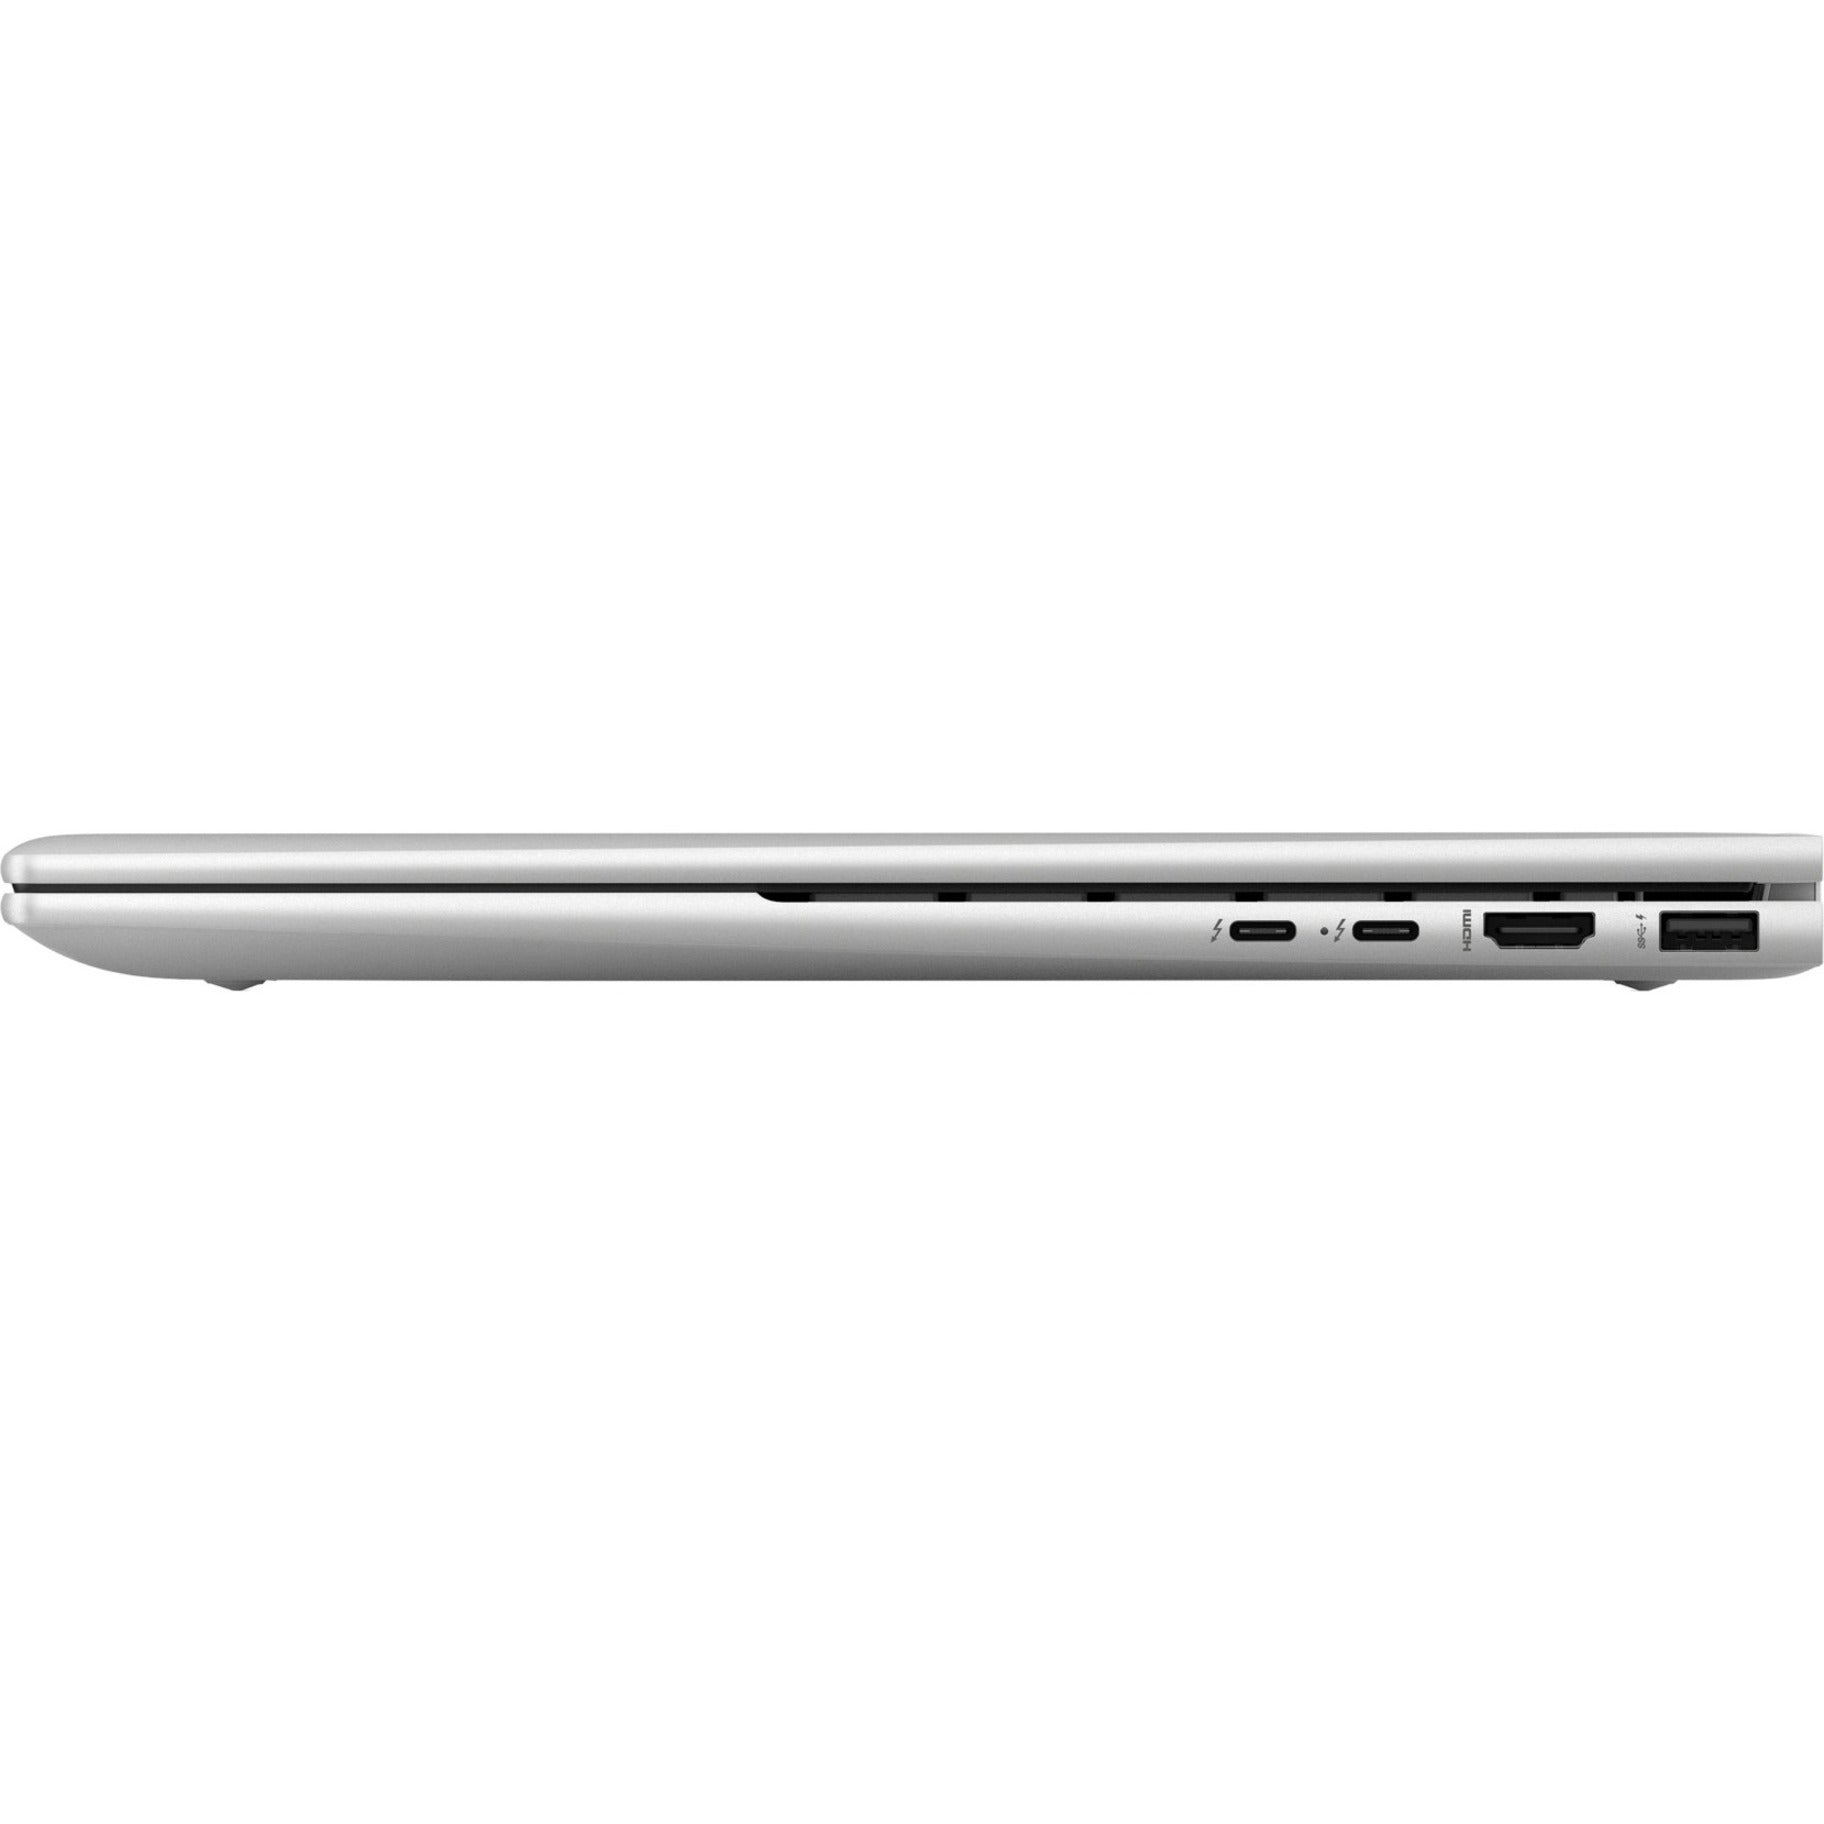 HP 378Y3UAR#ABL ENVY x360 2-in-1 Laptop 15-ew0008ca, 15.6" Full HD Touchscreen, Intel Iris Xe Graphics, 12 Hours Battery Run Time